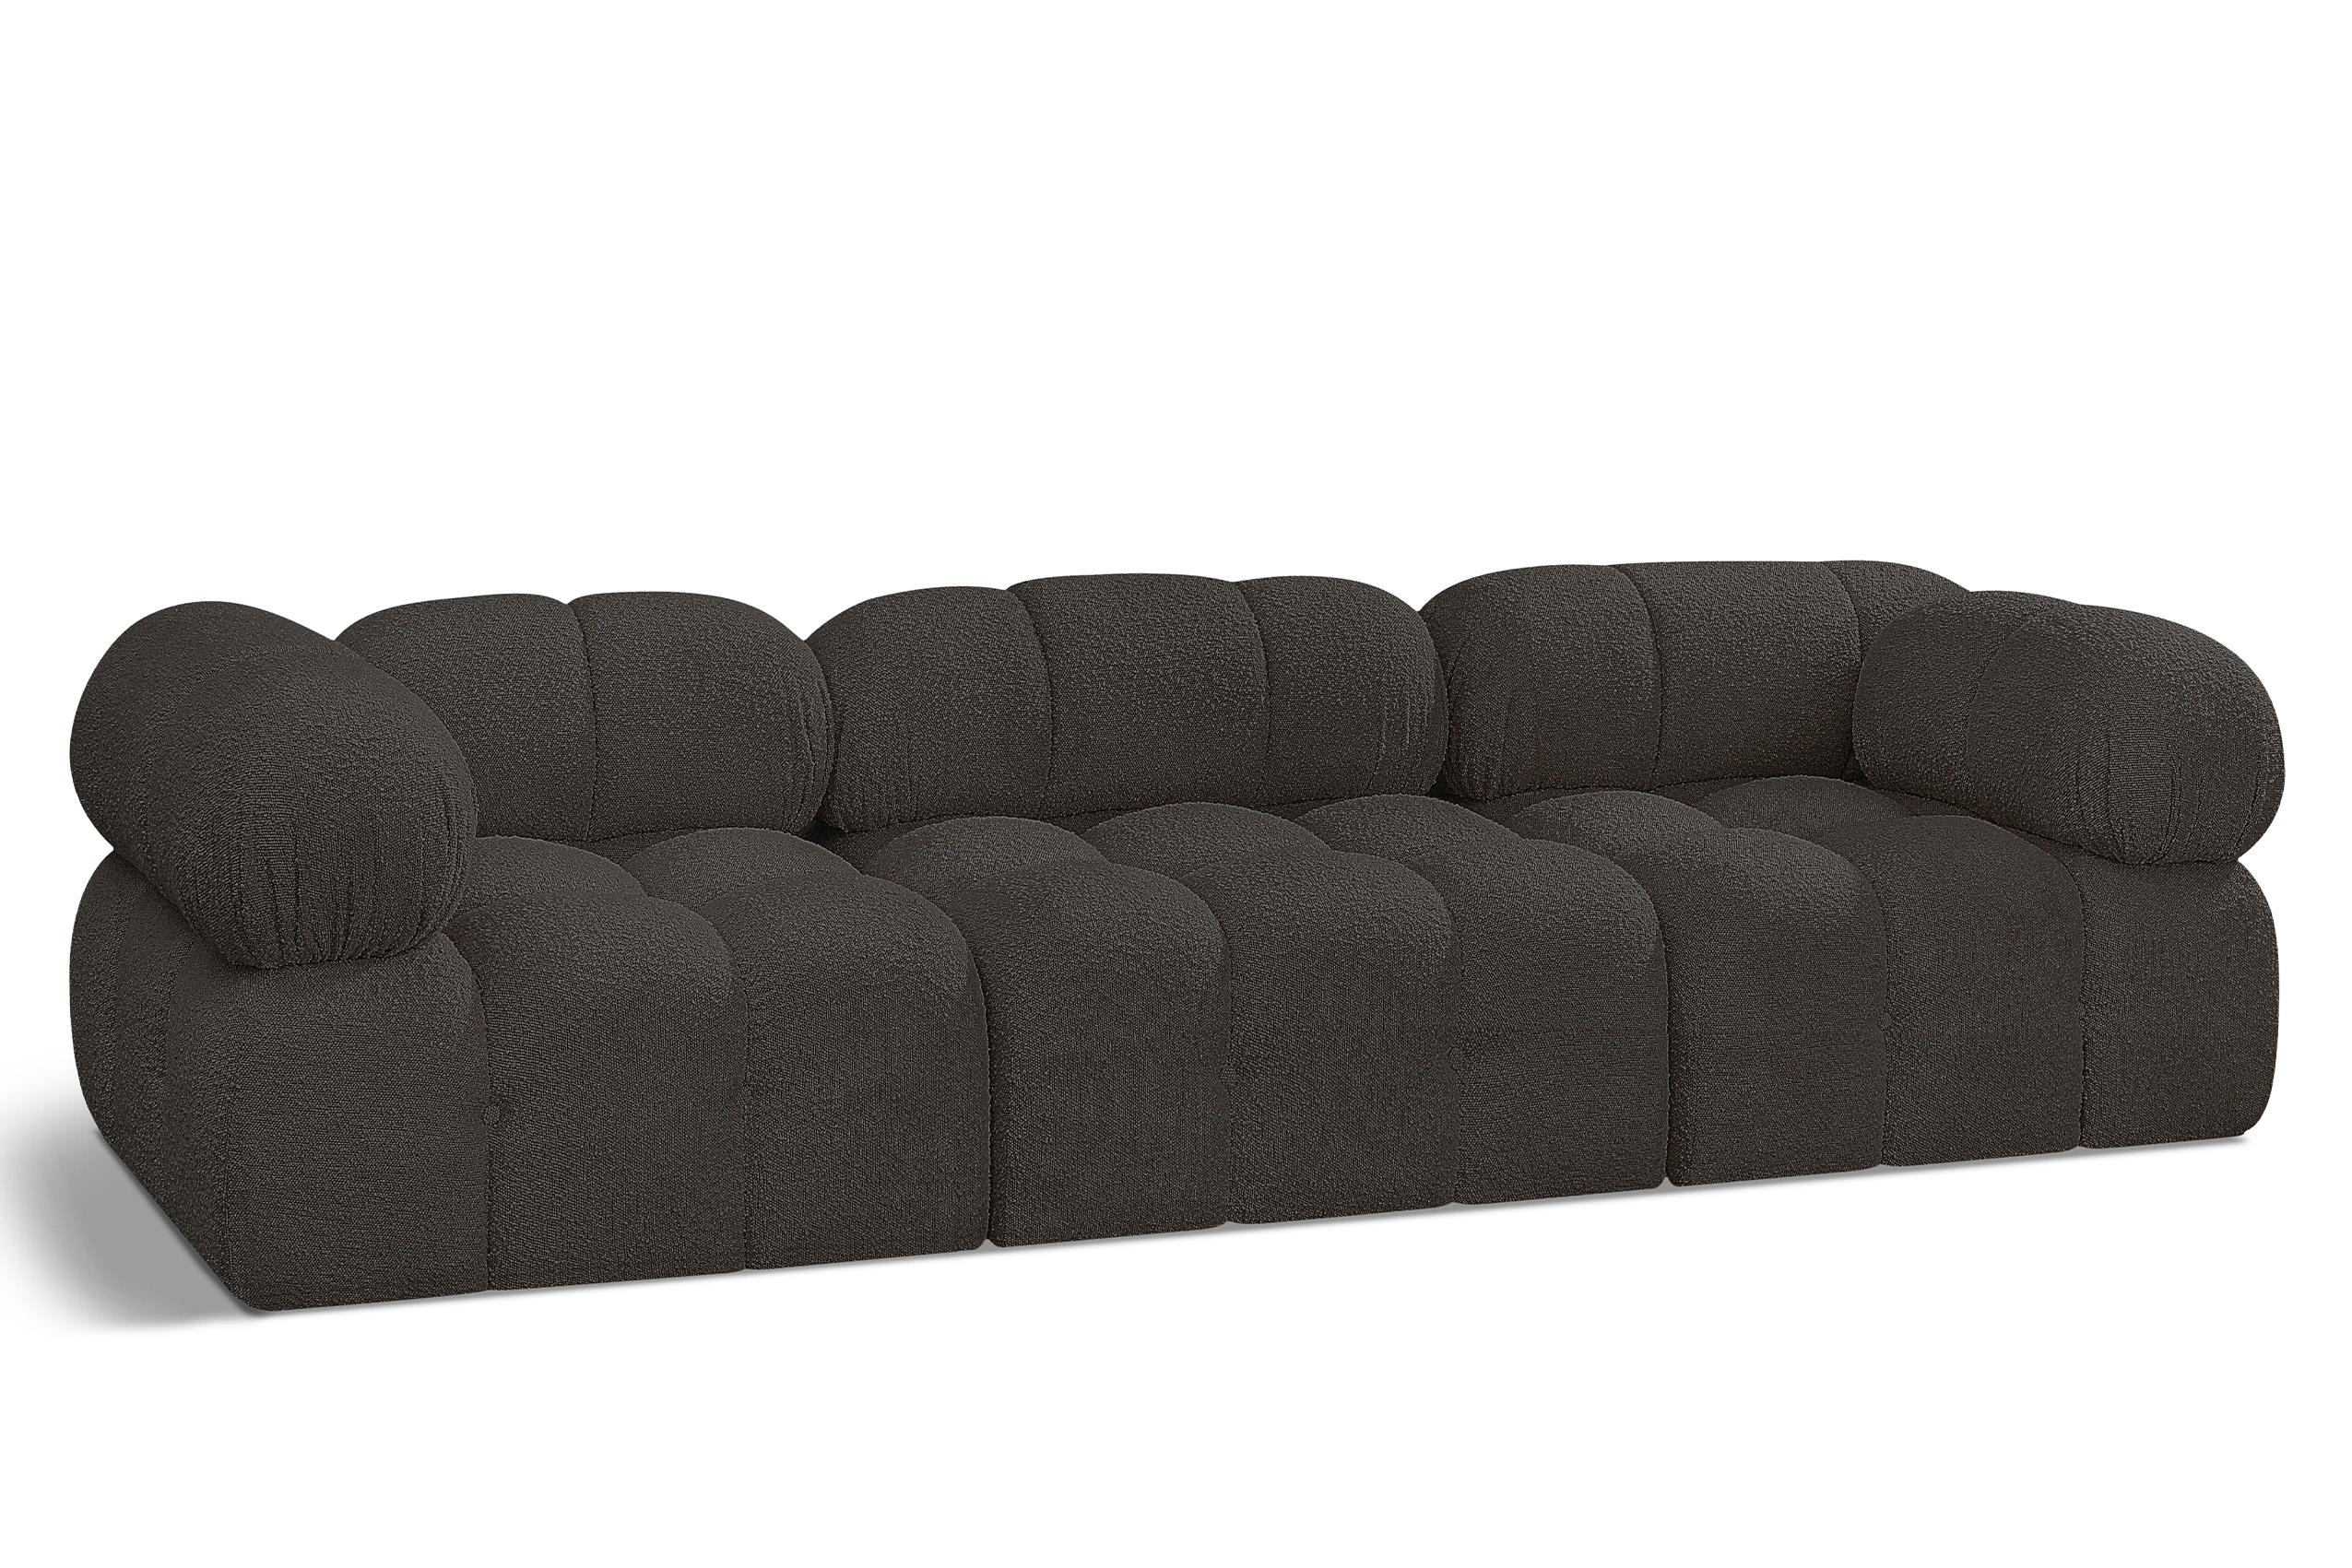 Contemporary, Modern Modular Sofa AMES 611Brown-S102A 611Brown-S102A in Brown 